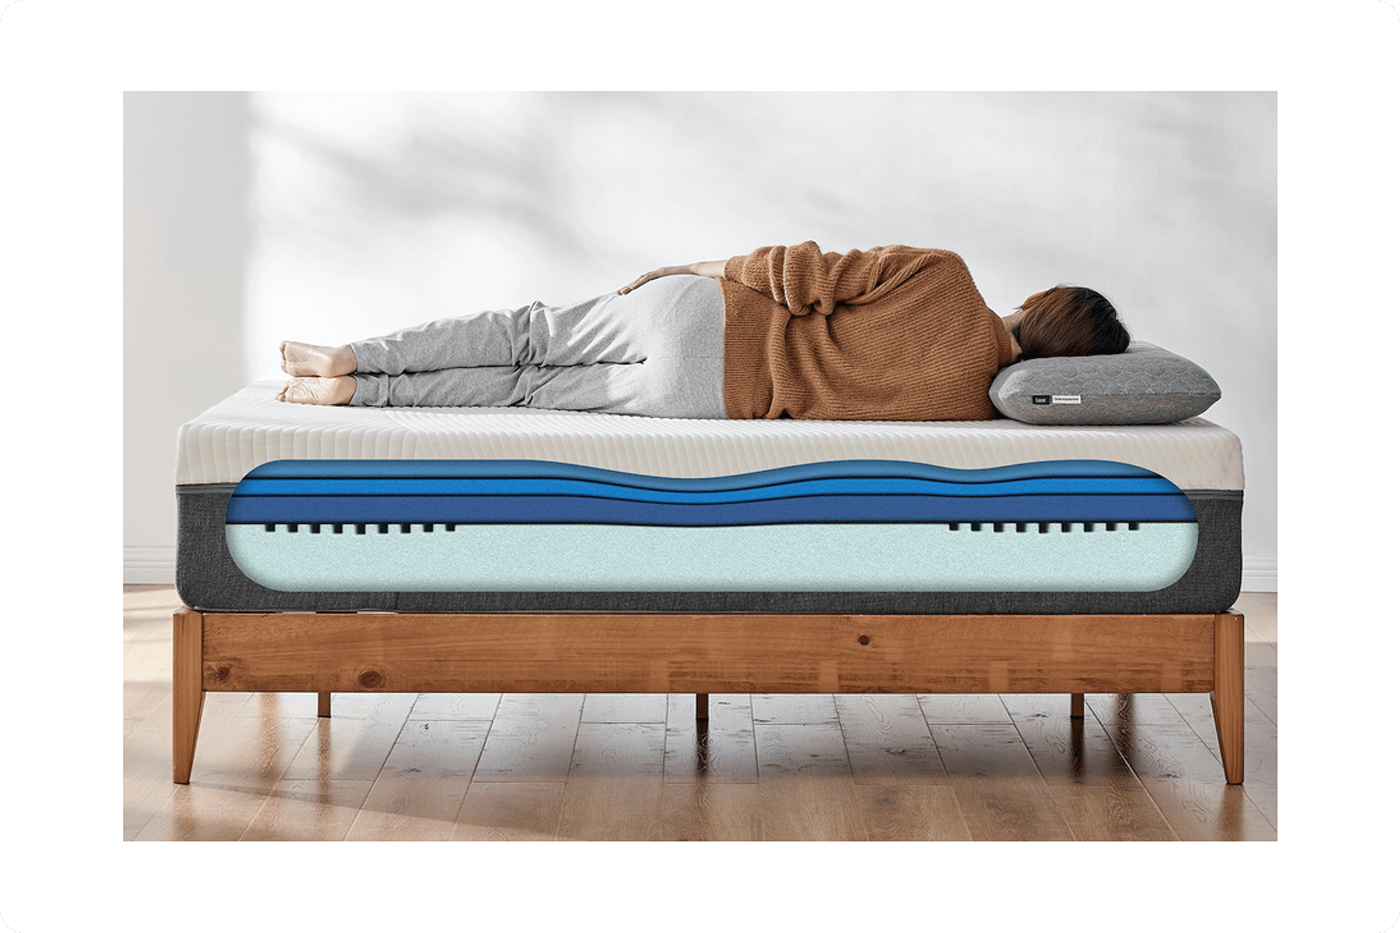 mattress Luuna brand Brand Development product development sleep stress rest branding  brand identity